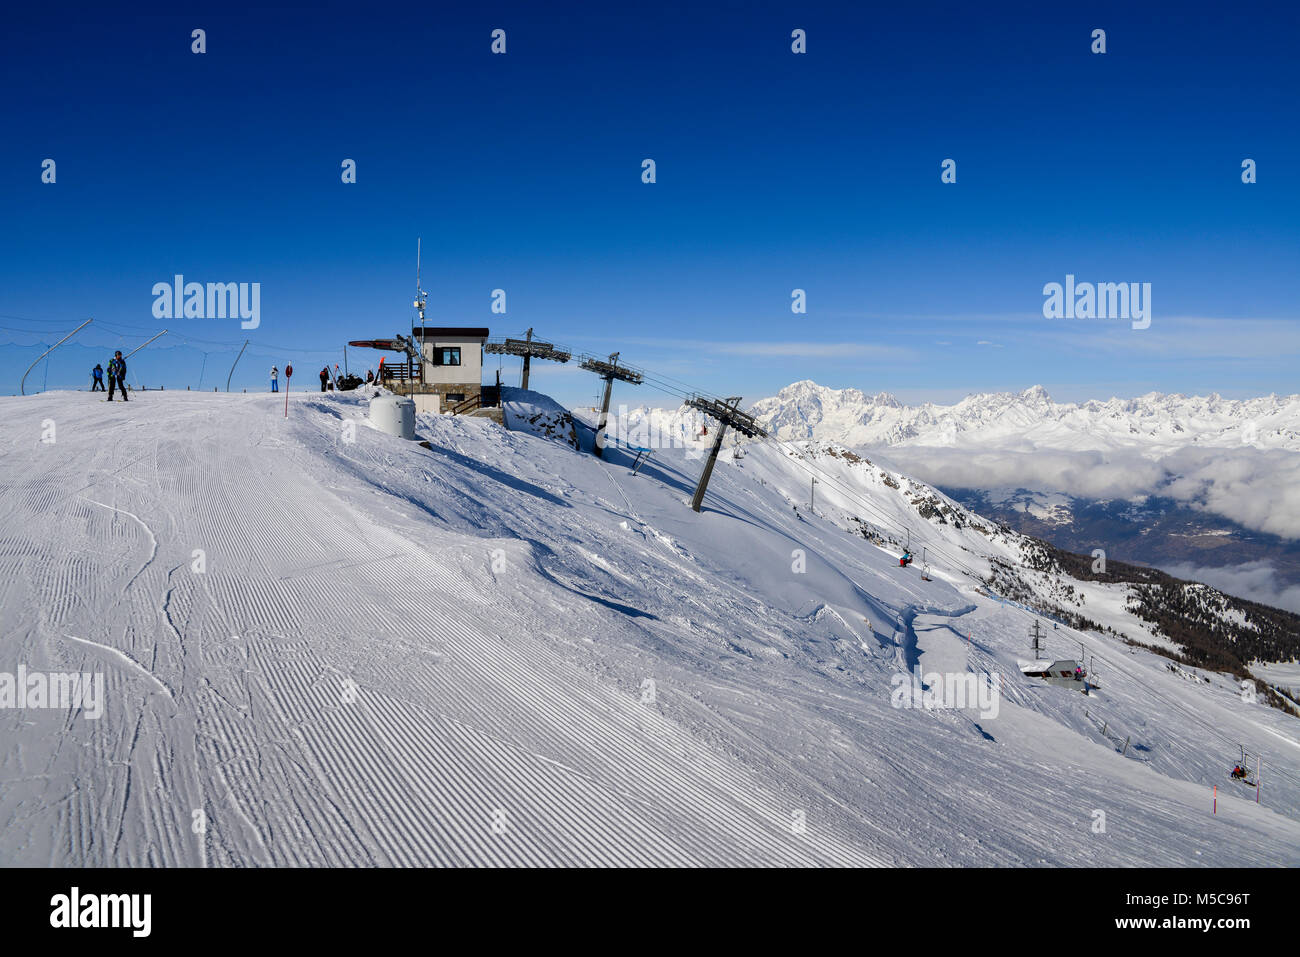 Pila, Aosta, Italy - Feb 19, 2018: Chairlift at Italian ski area of ...